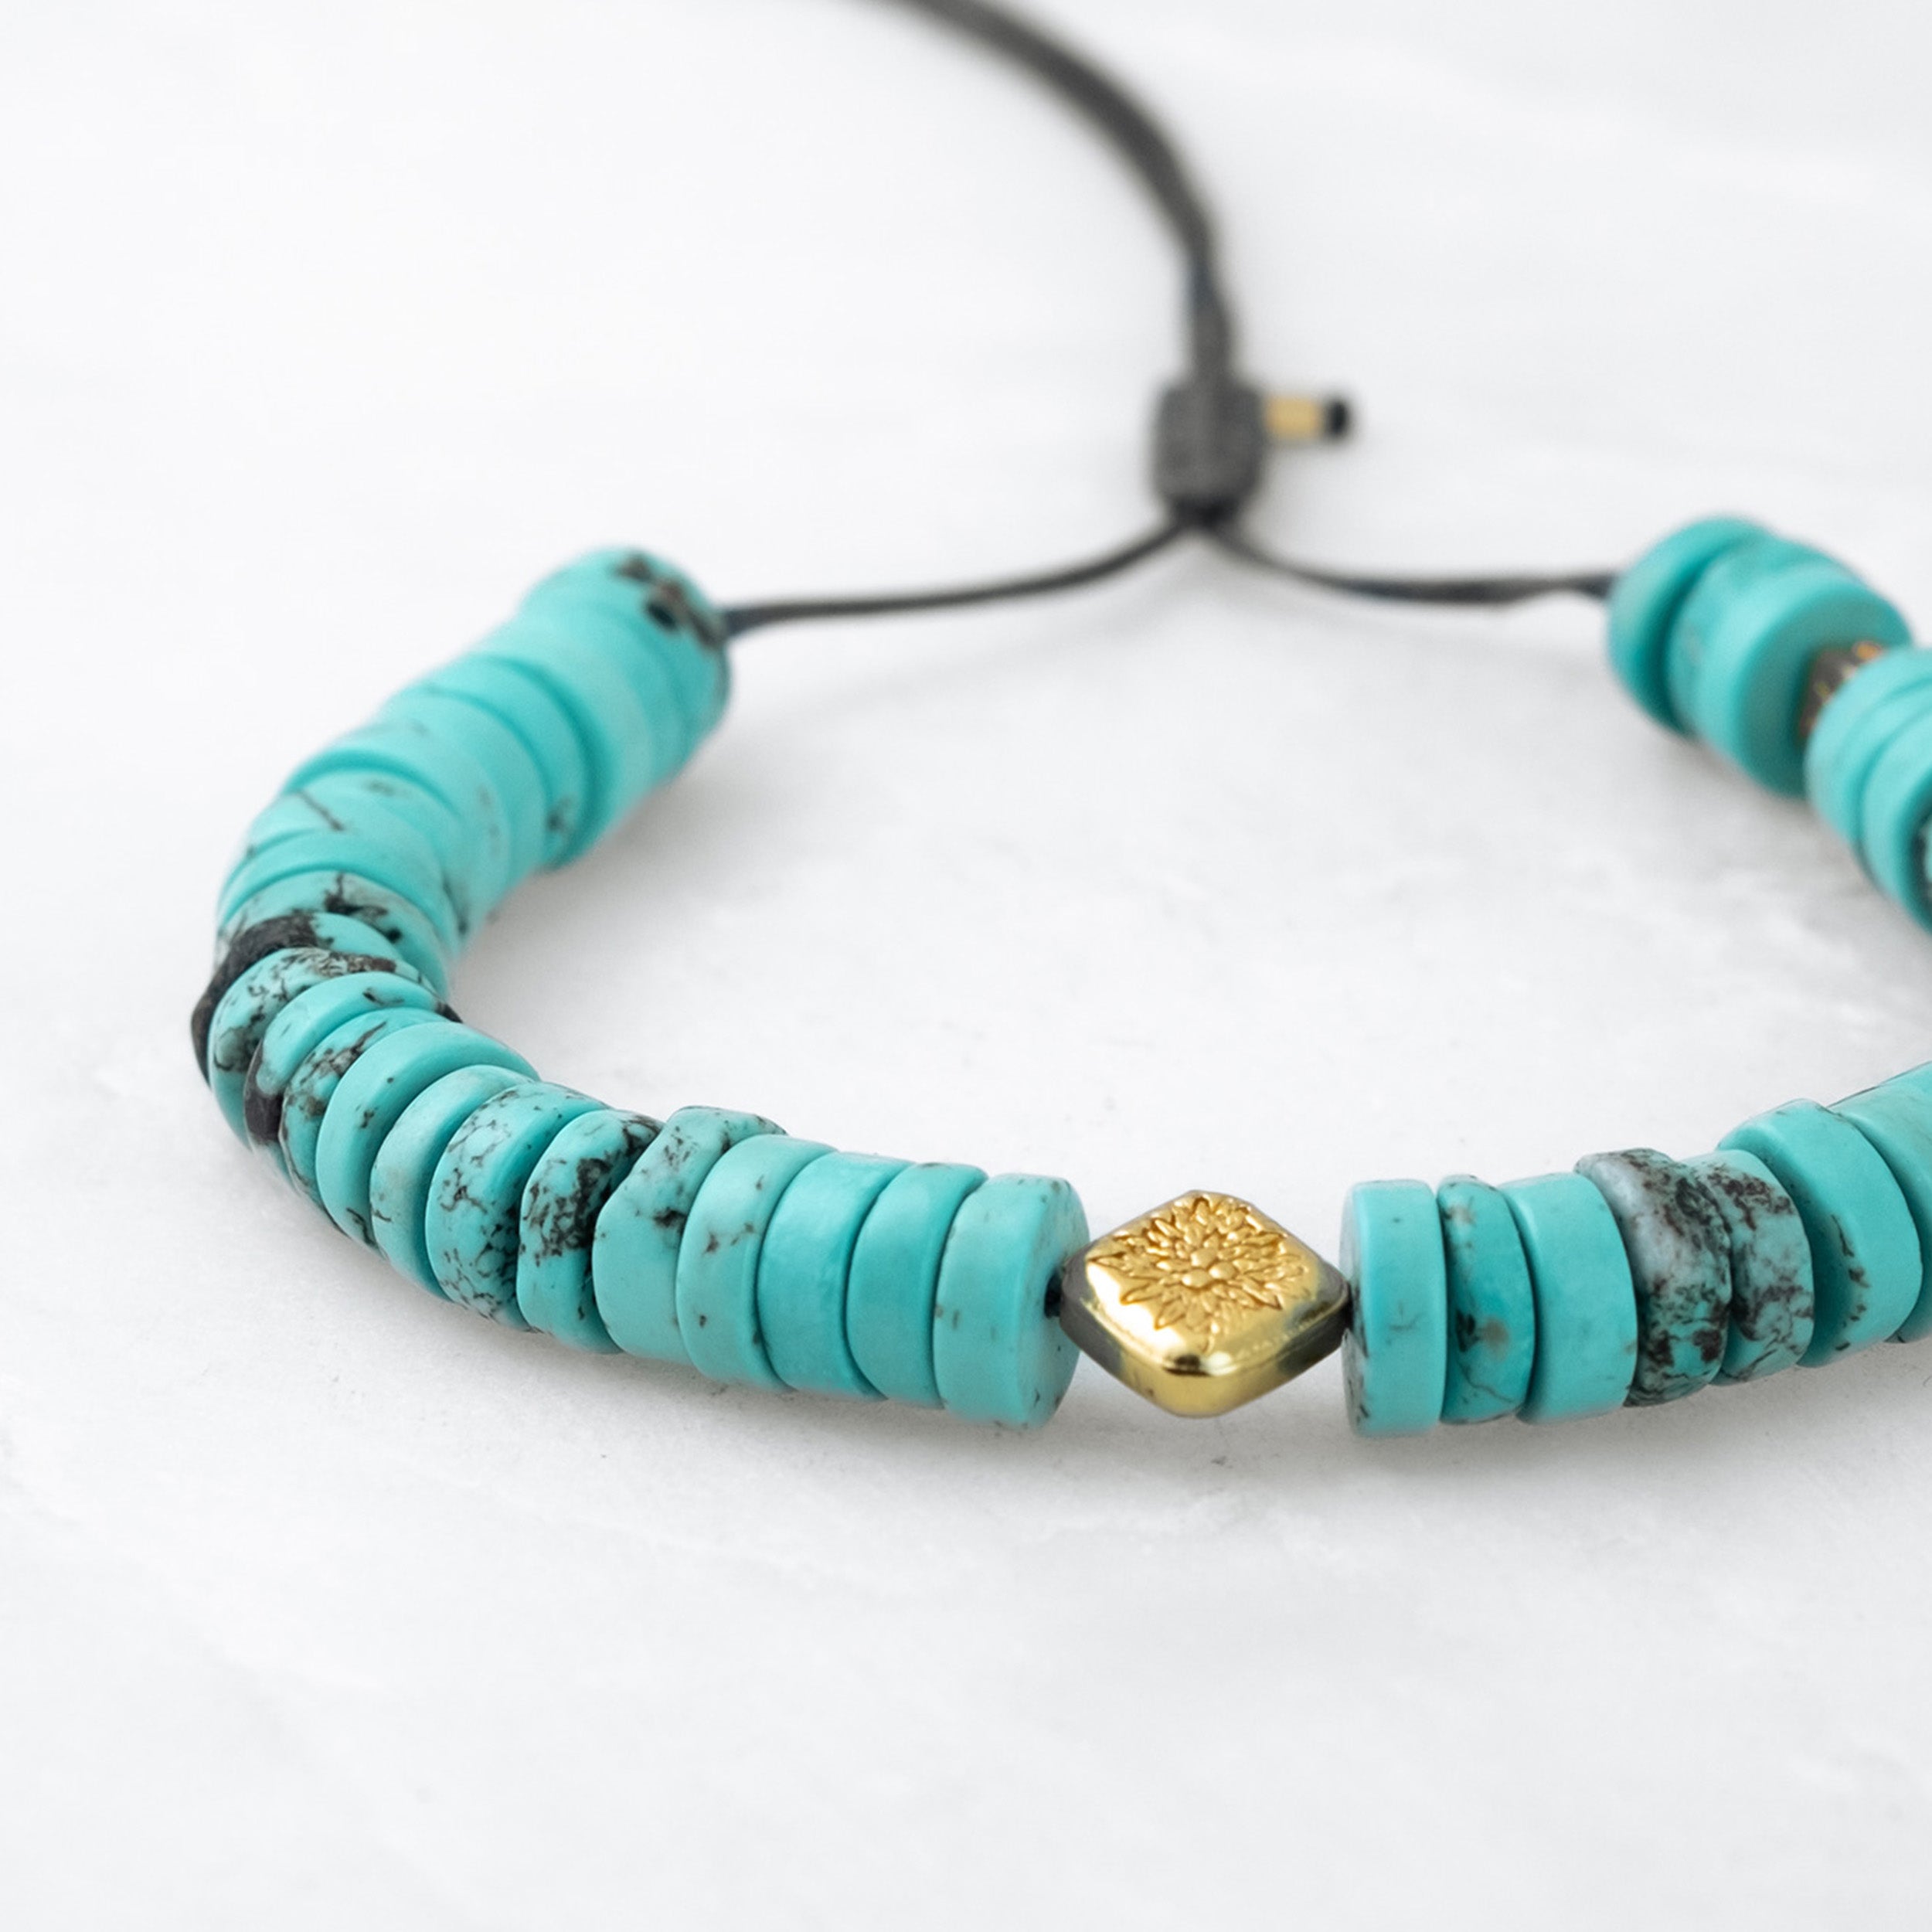 TIBET COLOR bracelet - Large turquoise, golden Amala